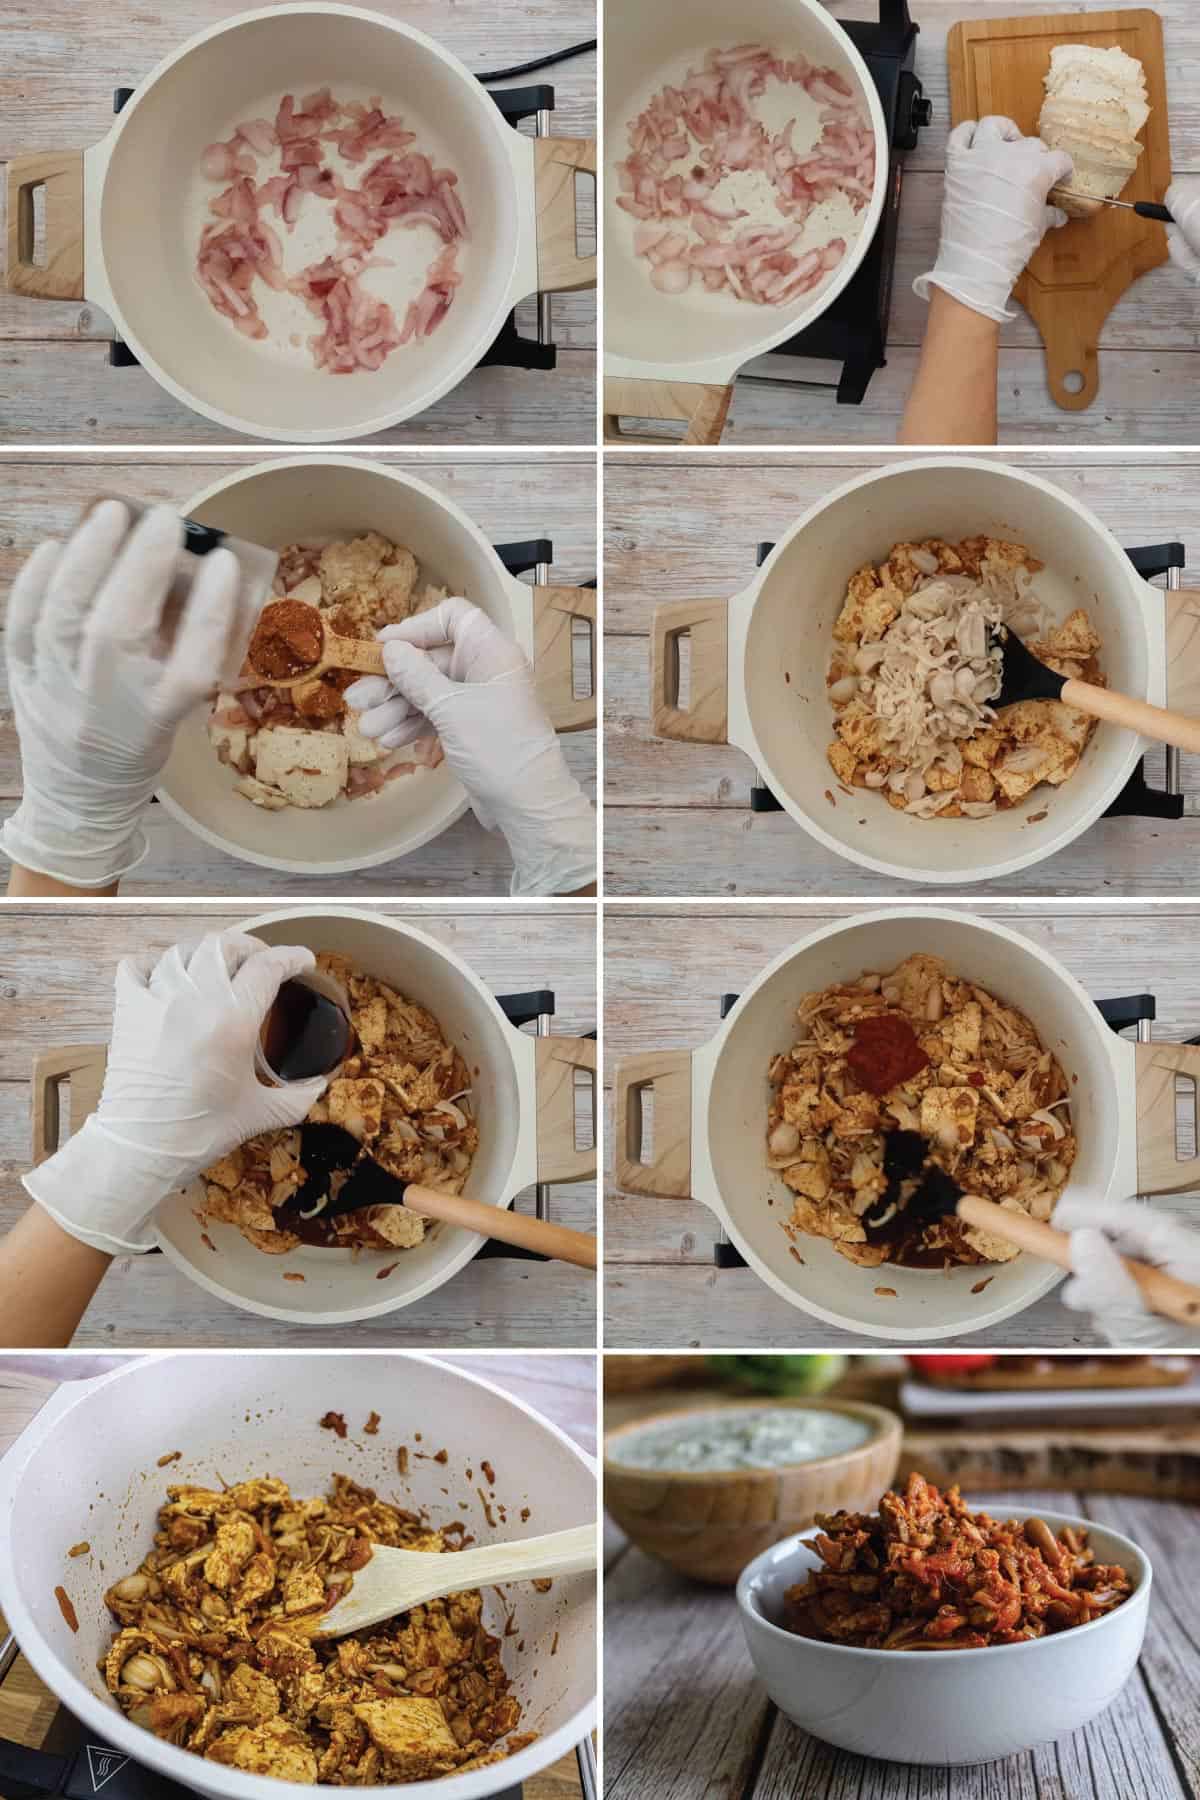 The process of making Vegan Jackfruit Shredded Chicken.